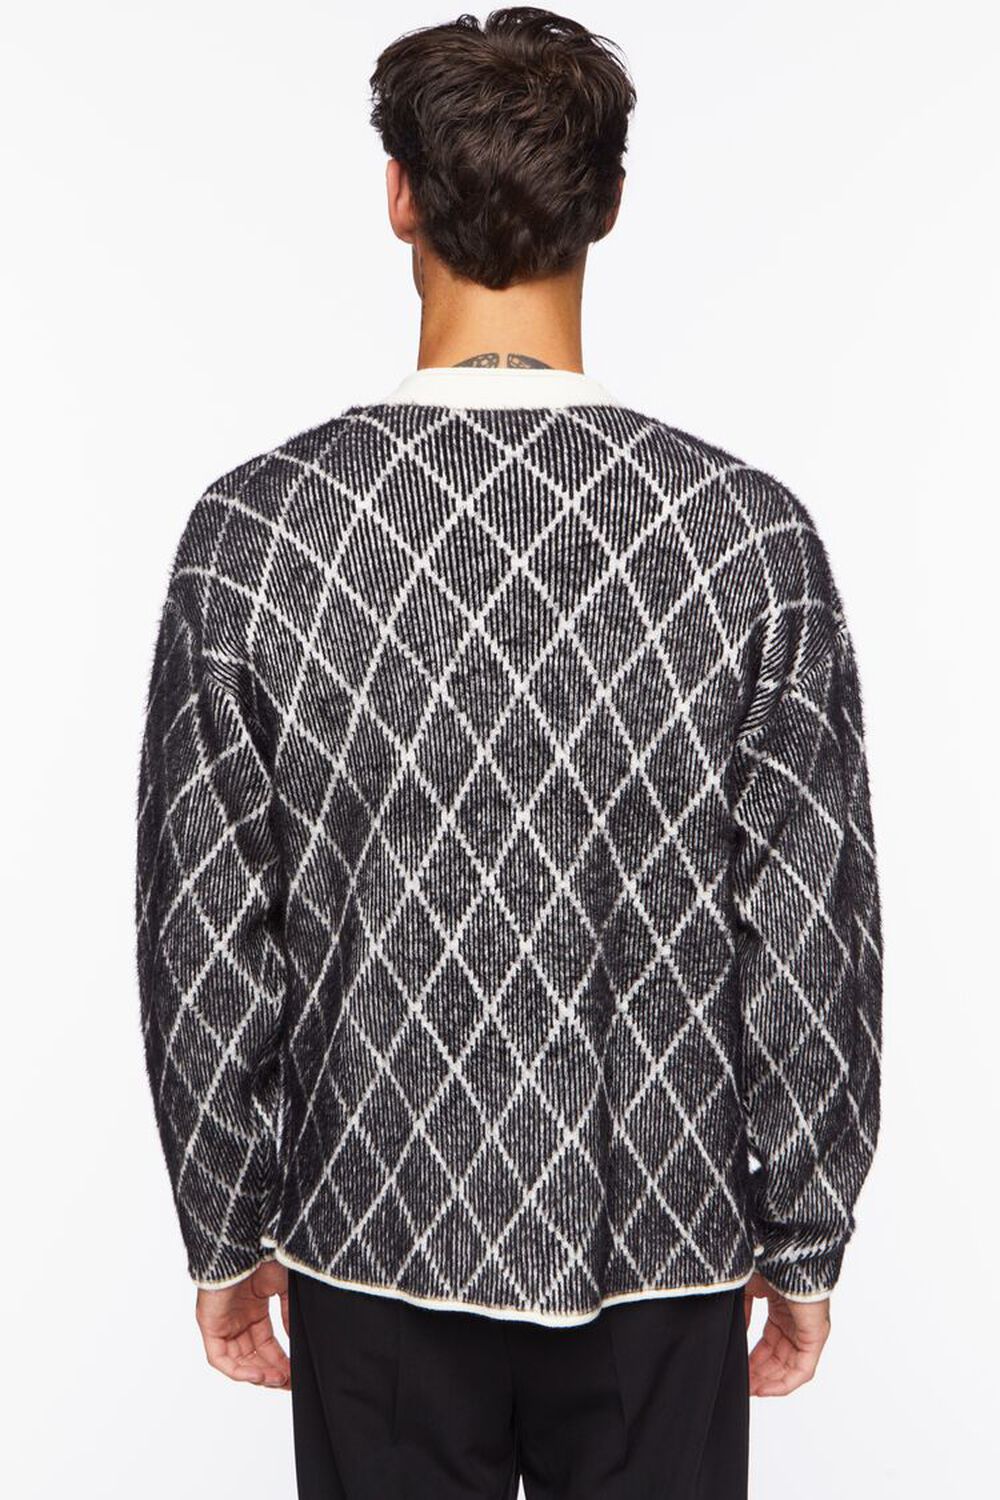 BLACK/MULTI Lattice Cardigan Sweater, image 3